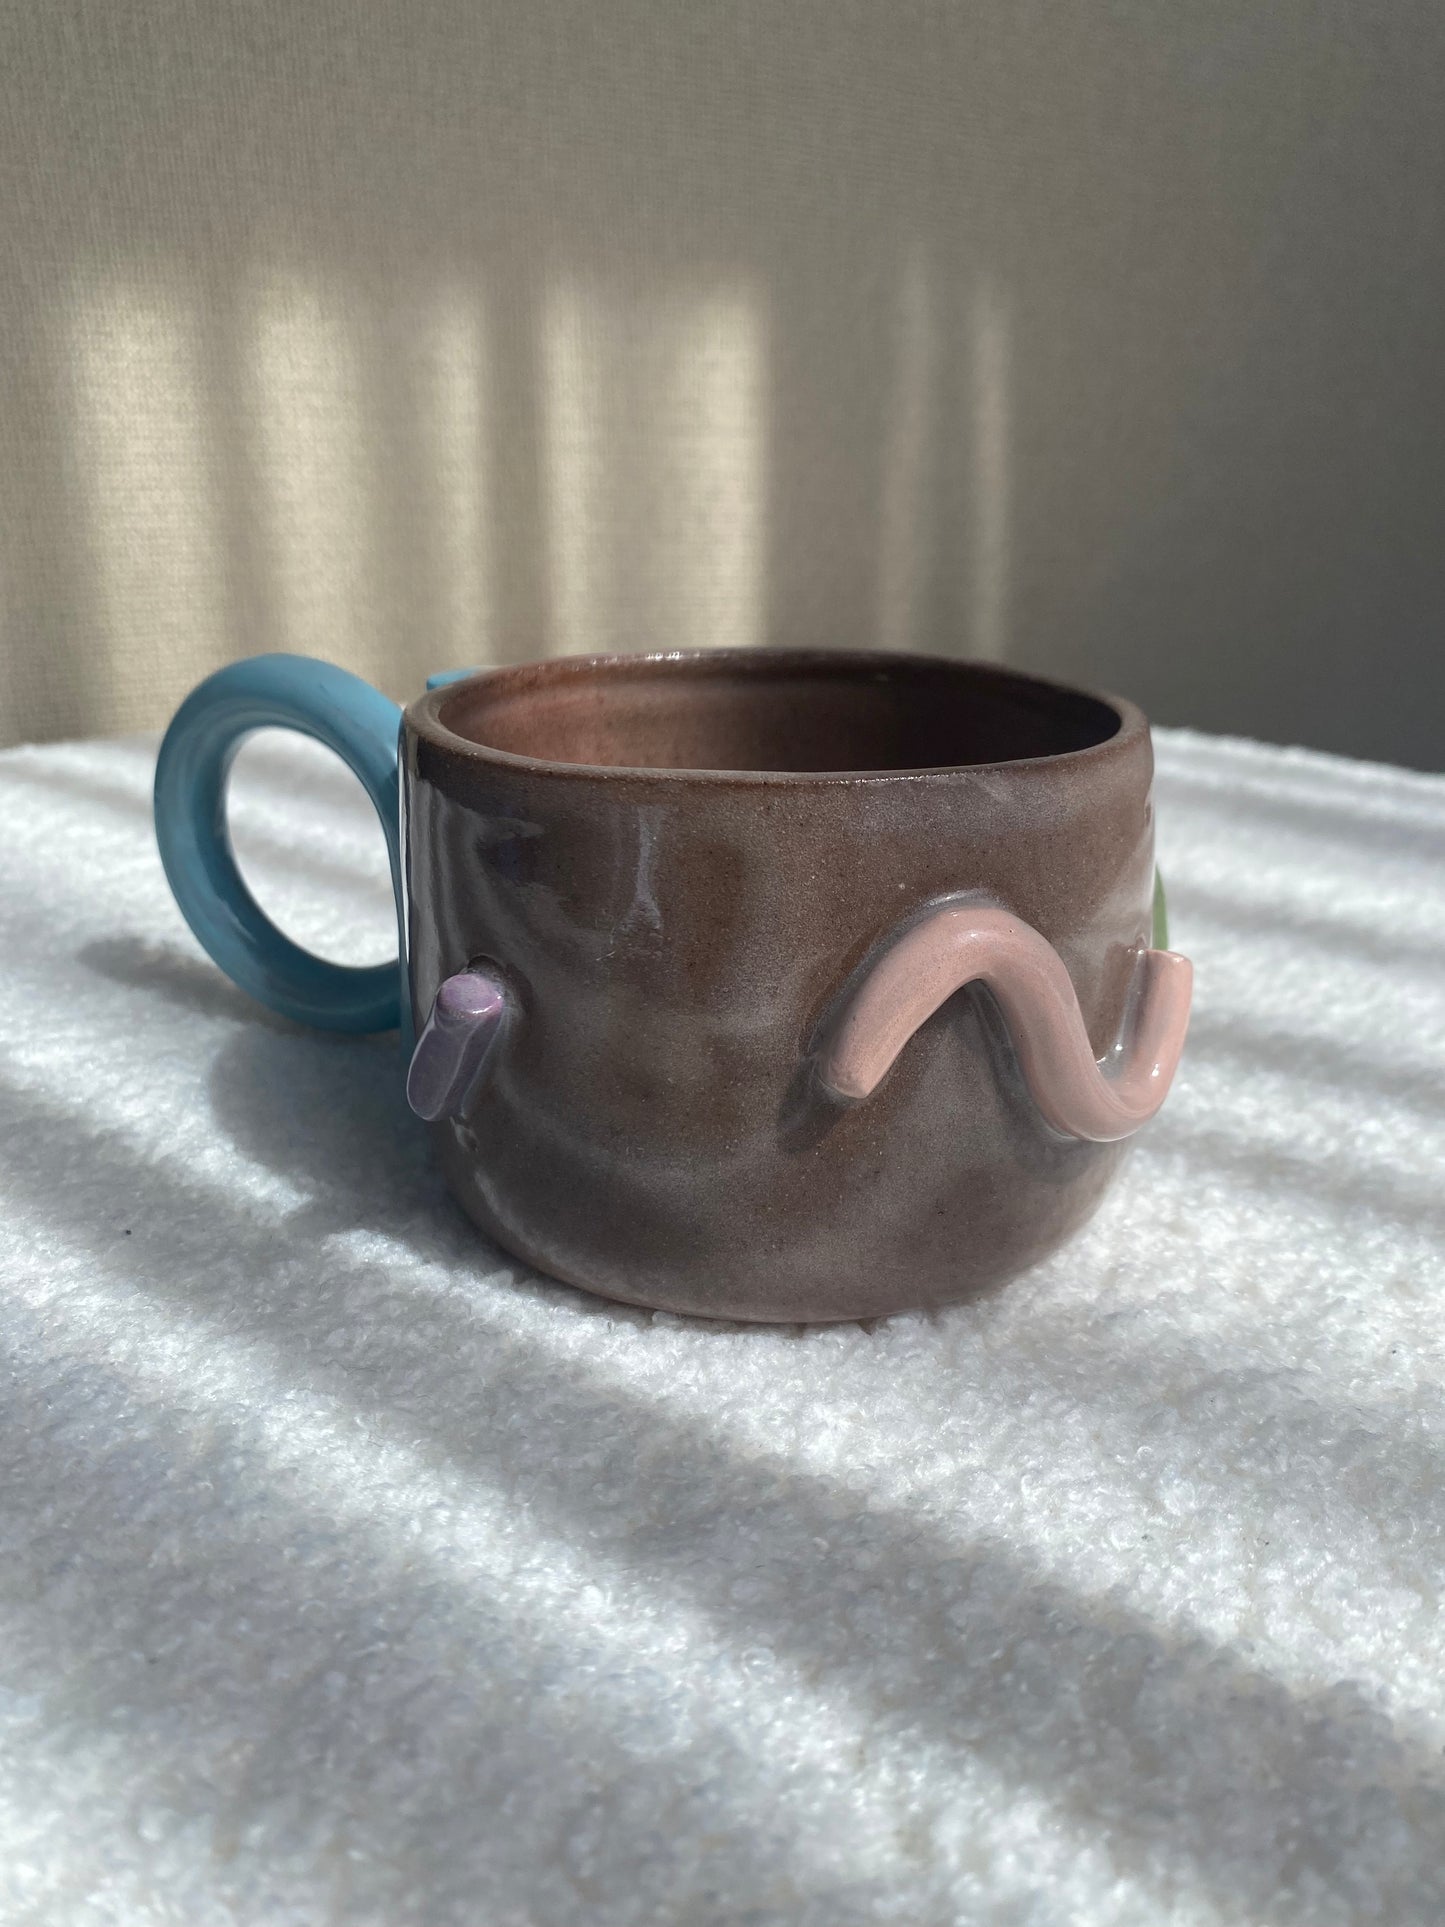 Wonky mug